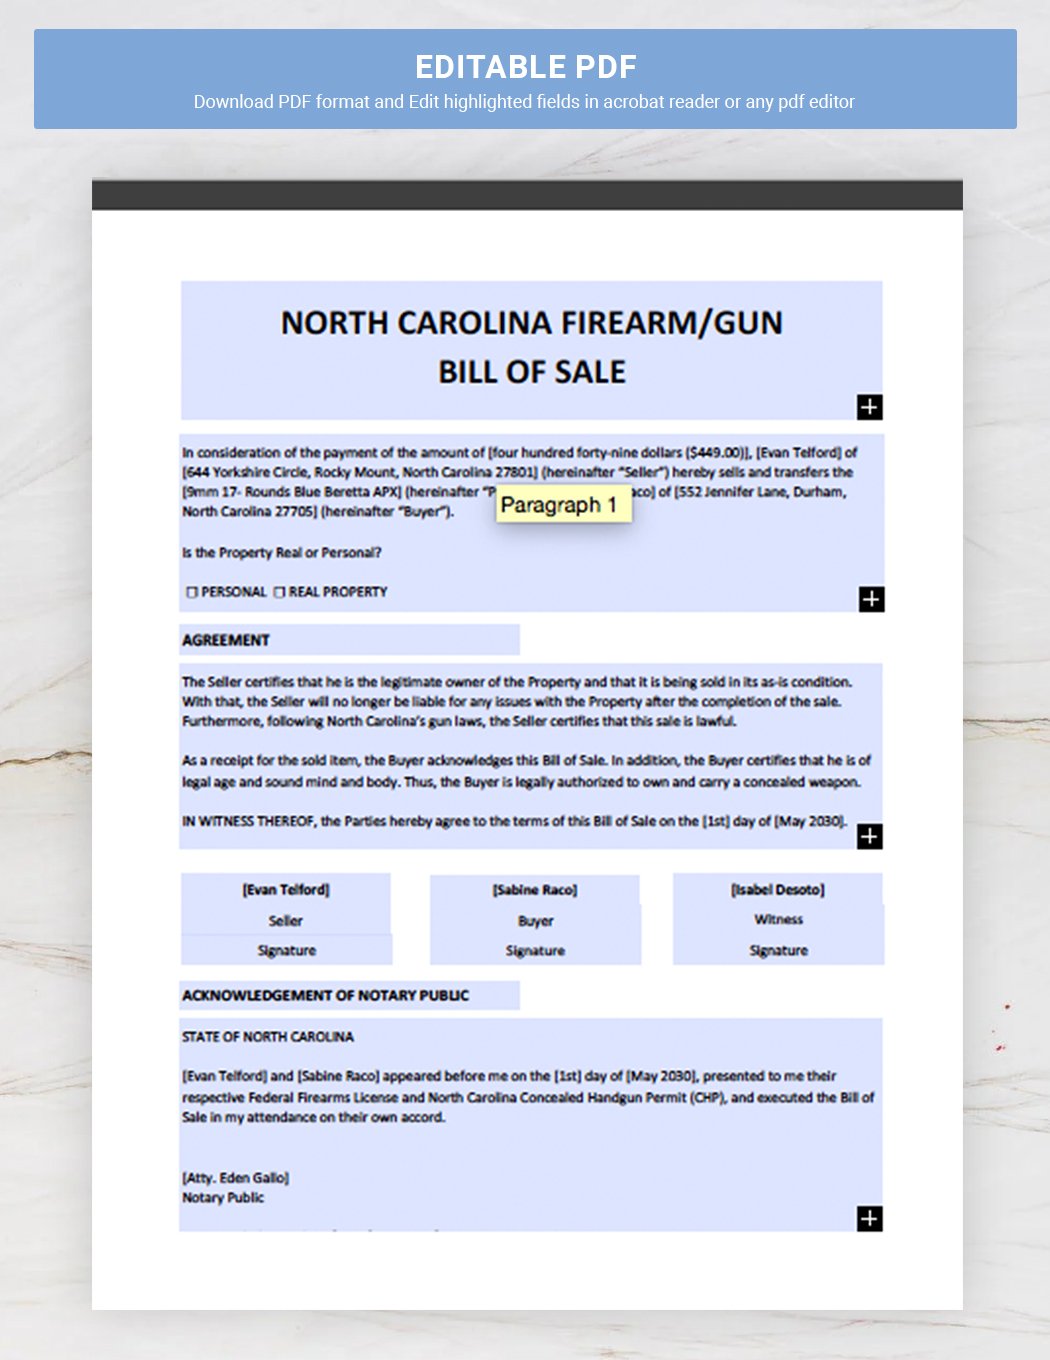 North Carolina Firearm / Gun Bill of Sale Form Template in Word, Google